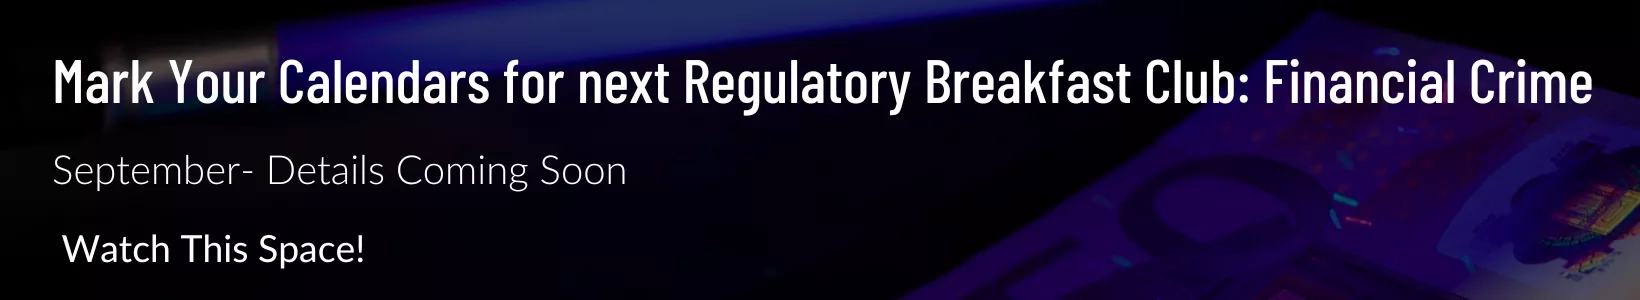 Regulatory Breakfast Club - Financial Crime